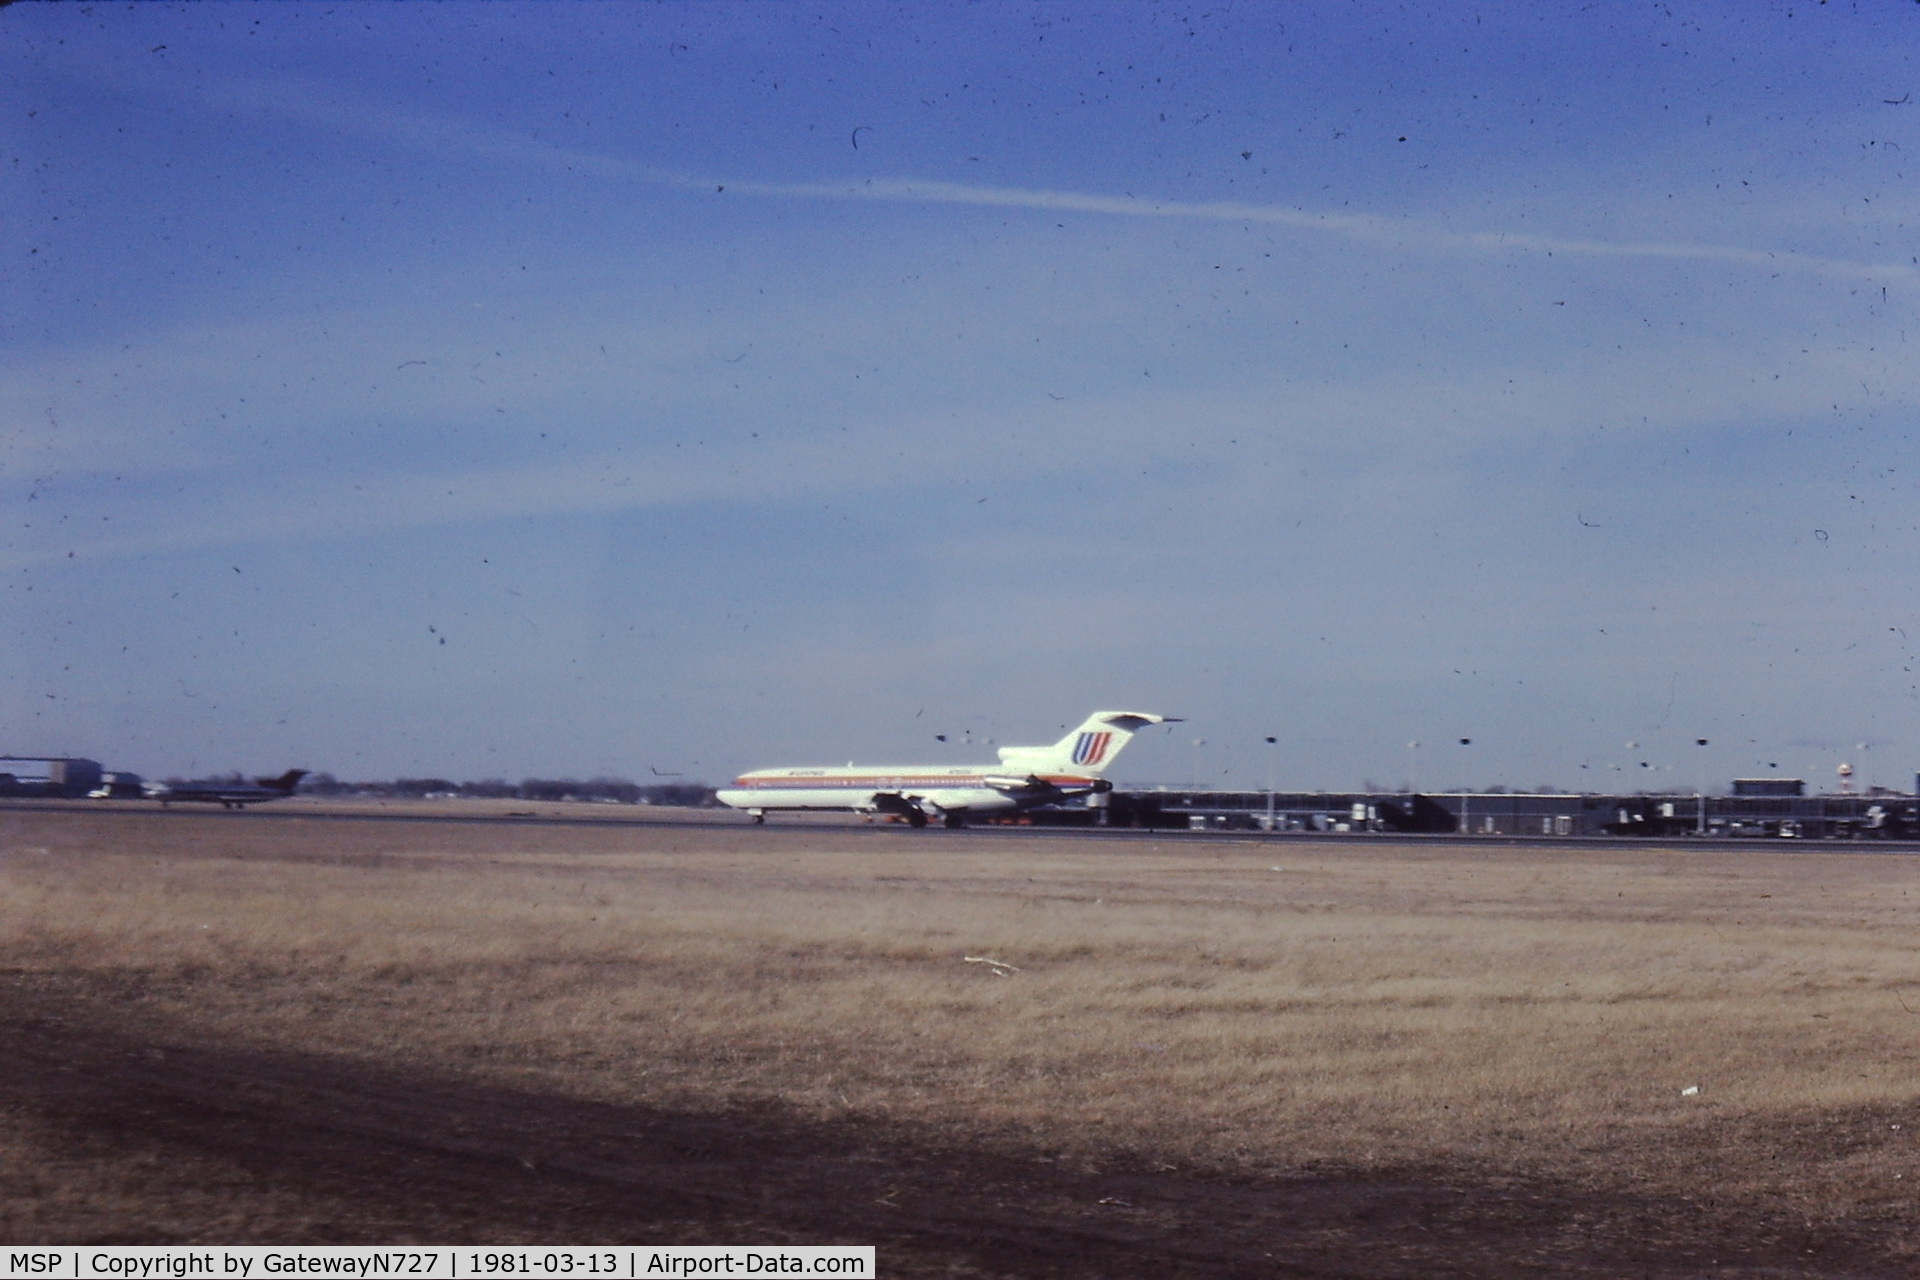 Minneapolis-st Paul Intl/wold-chamberlain Airport (MSP) - United B727-222 on landing roll rwy 29L. Taken from N84891.